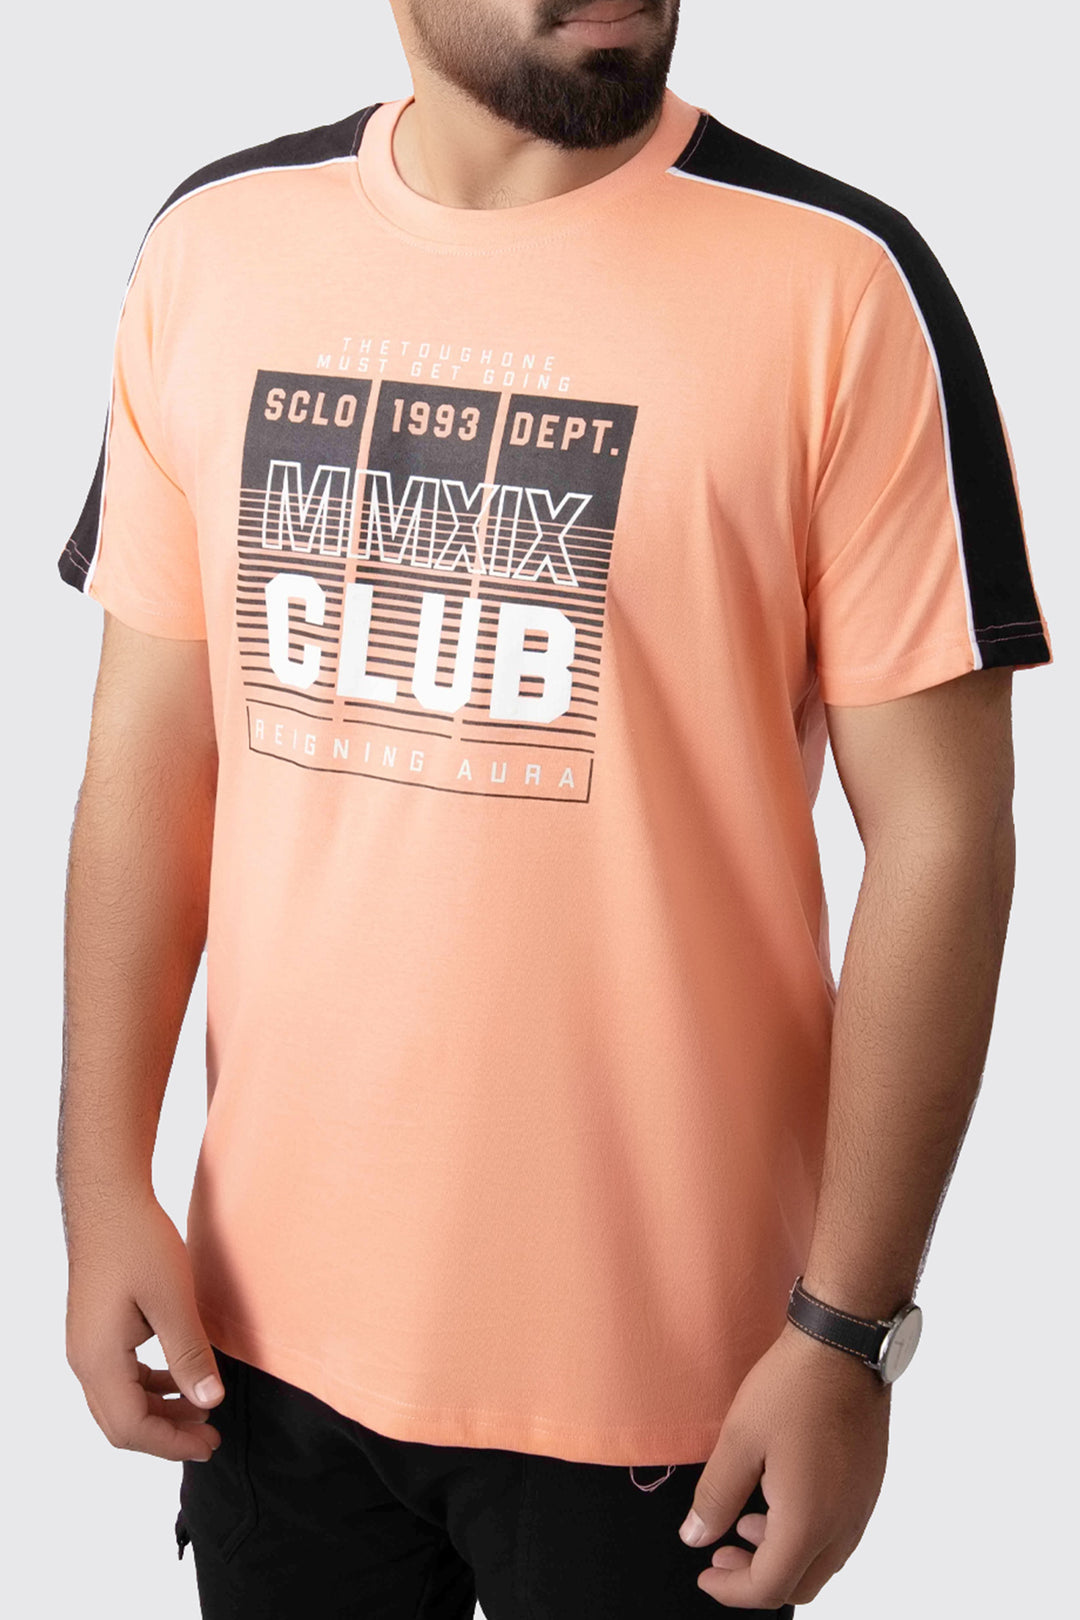 Coral & Black Graphic T-Shirt - A23 - MT0296R